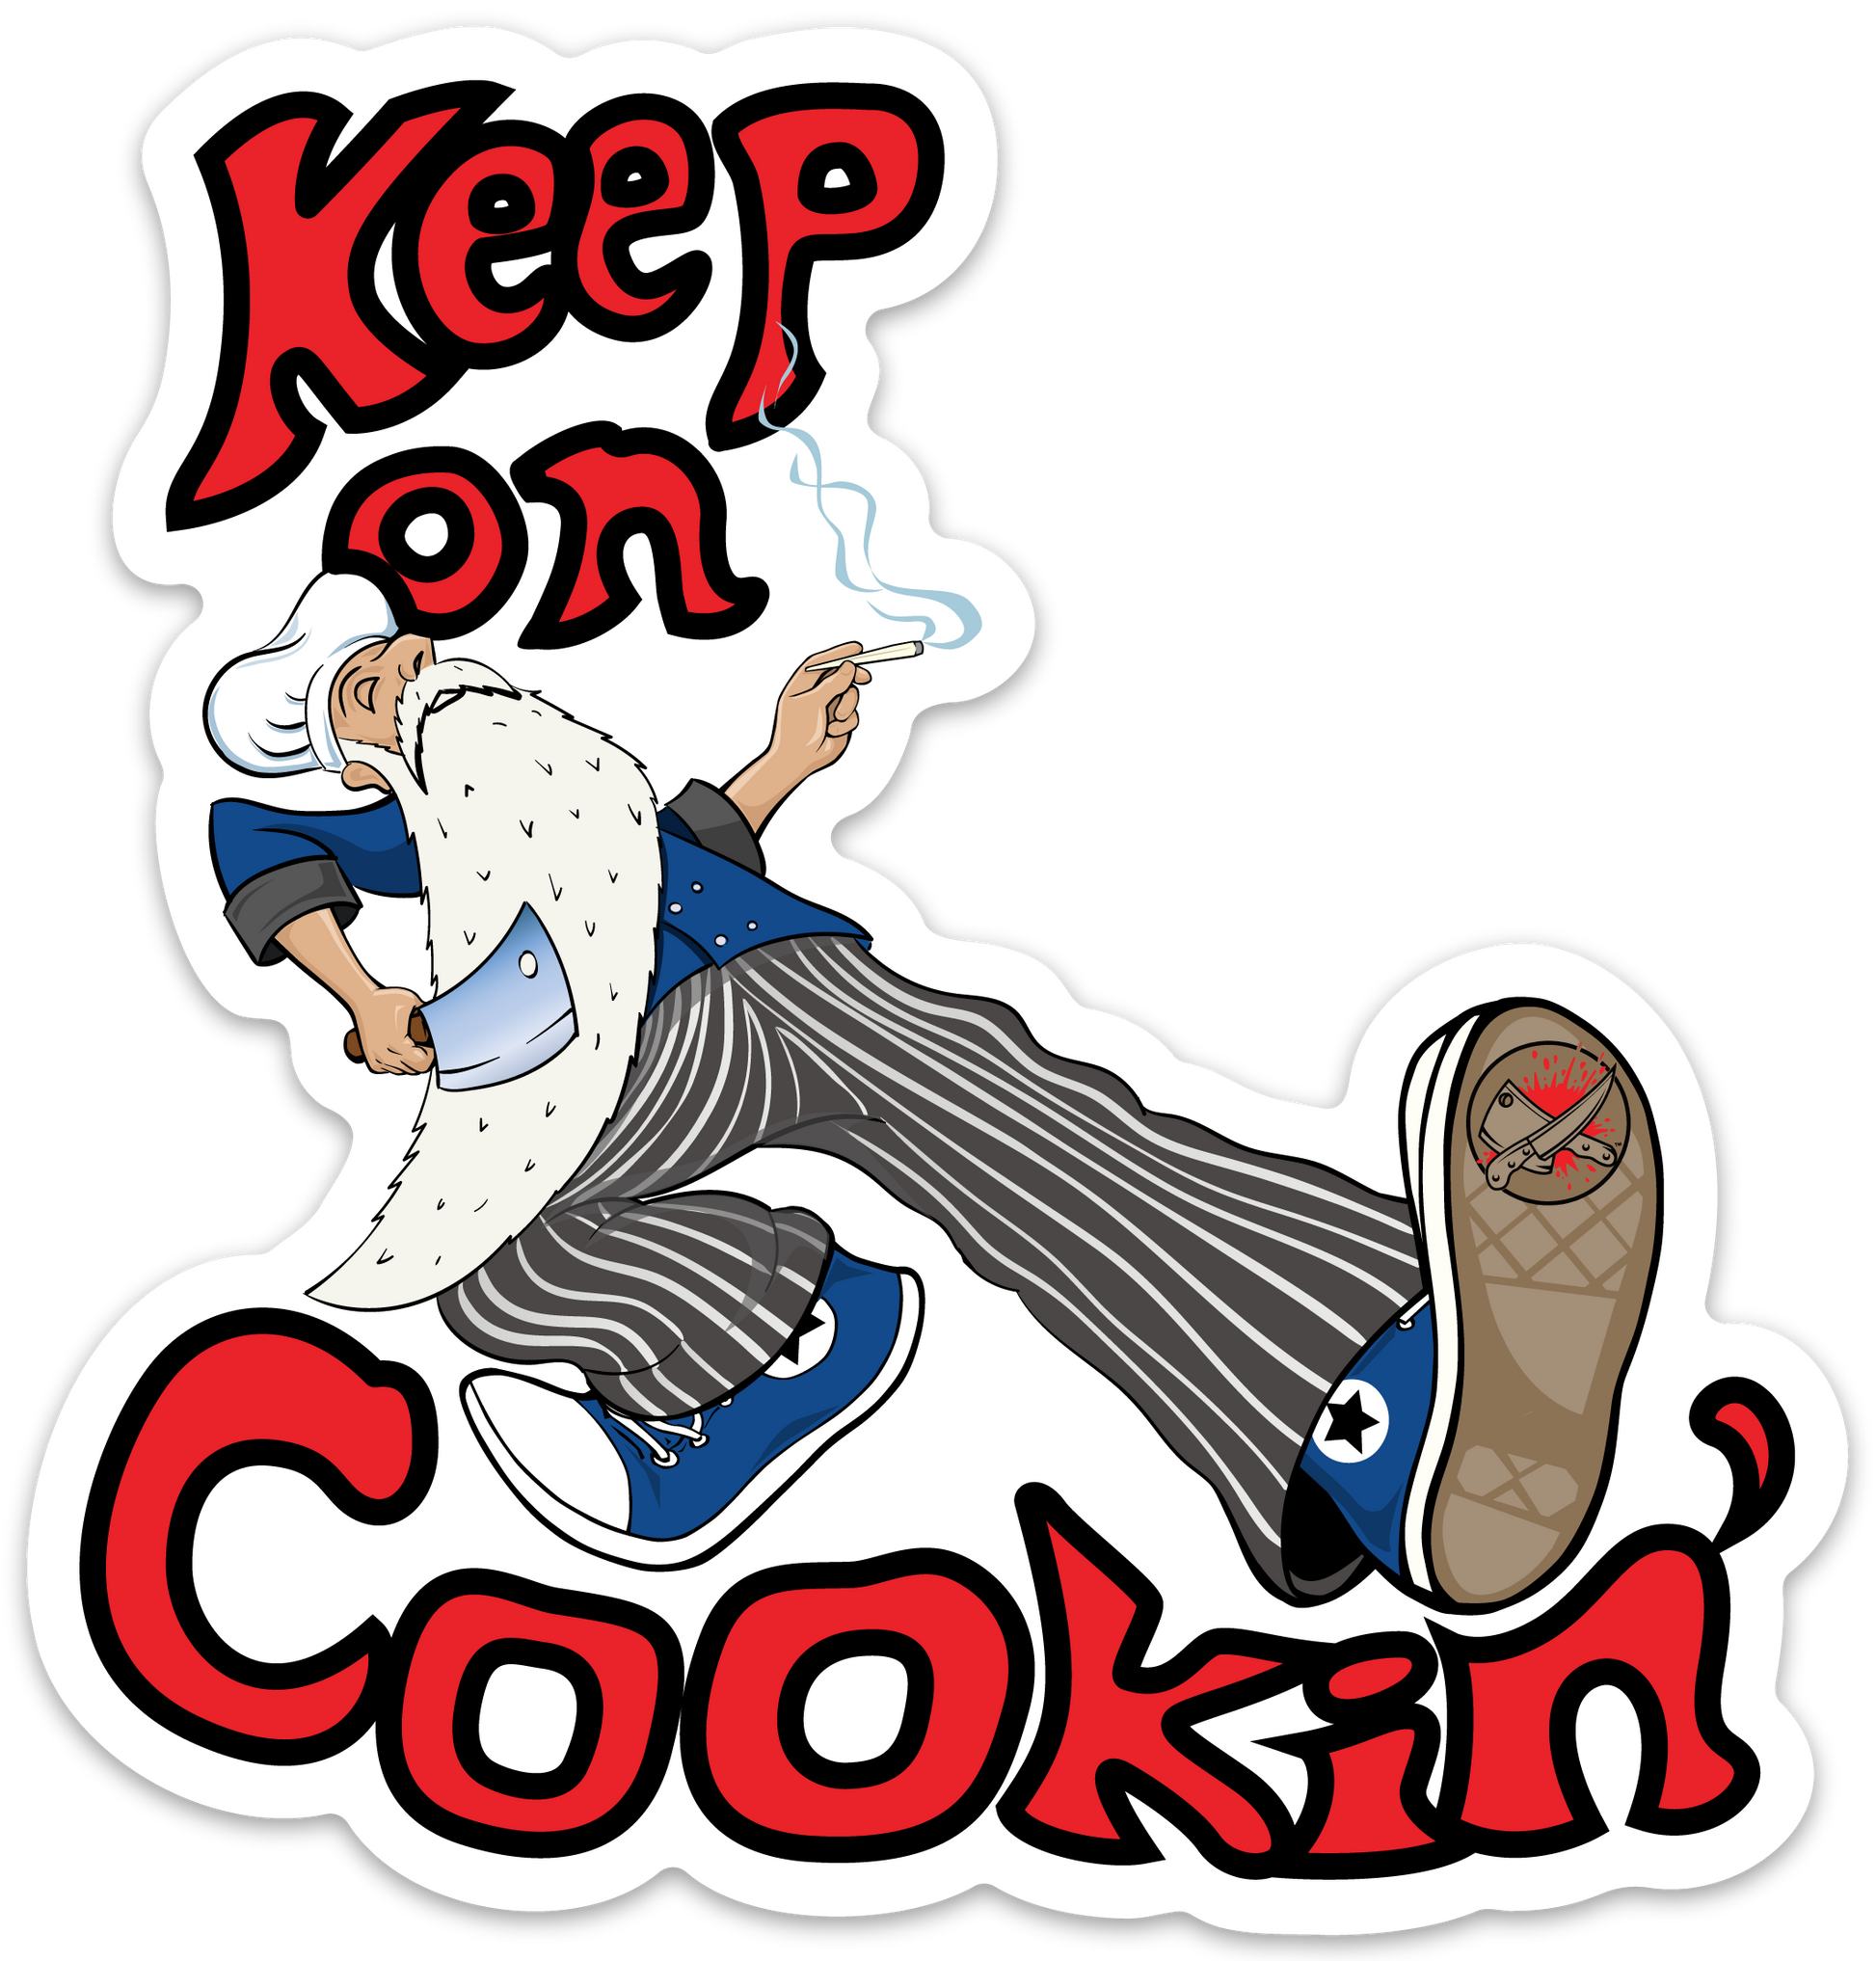 Keep On Cookin' Sticker Cleaverandblade.com